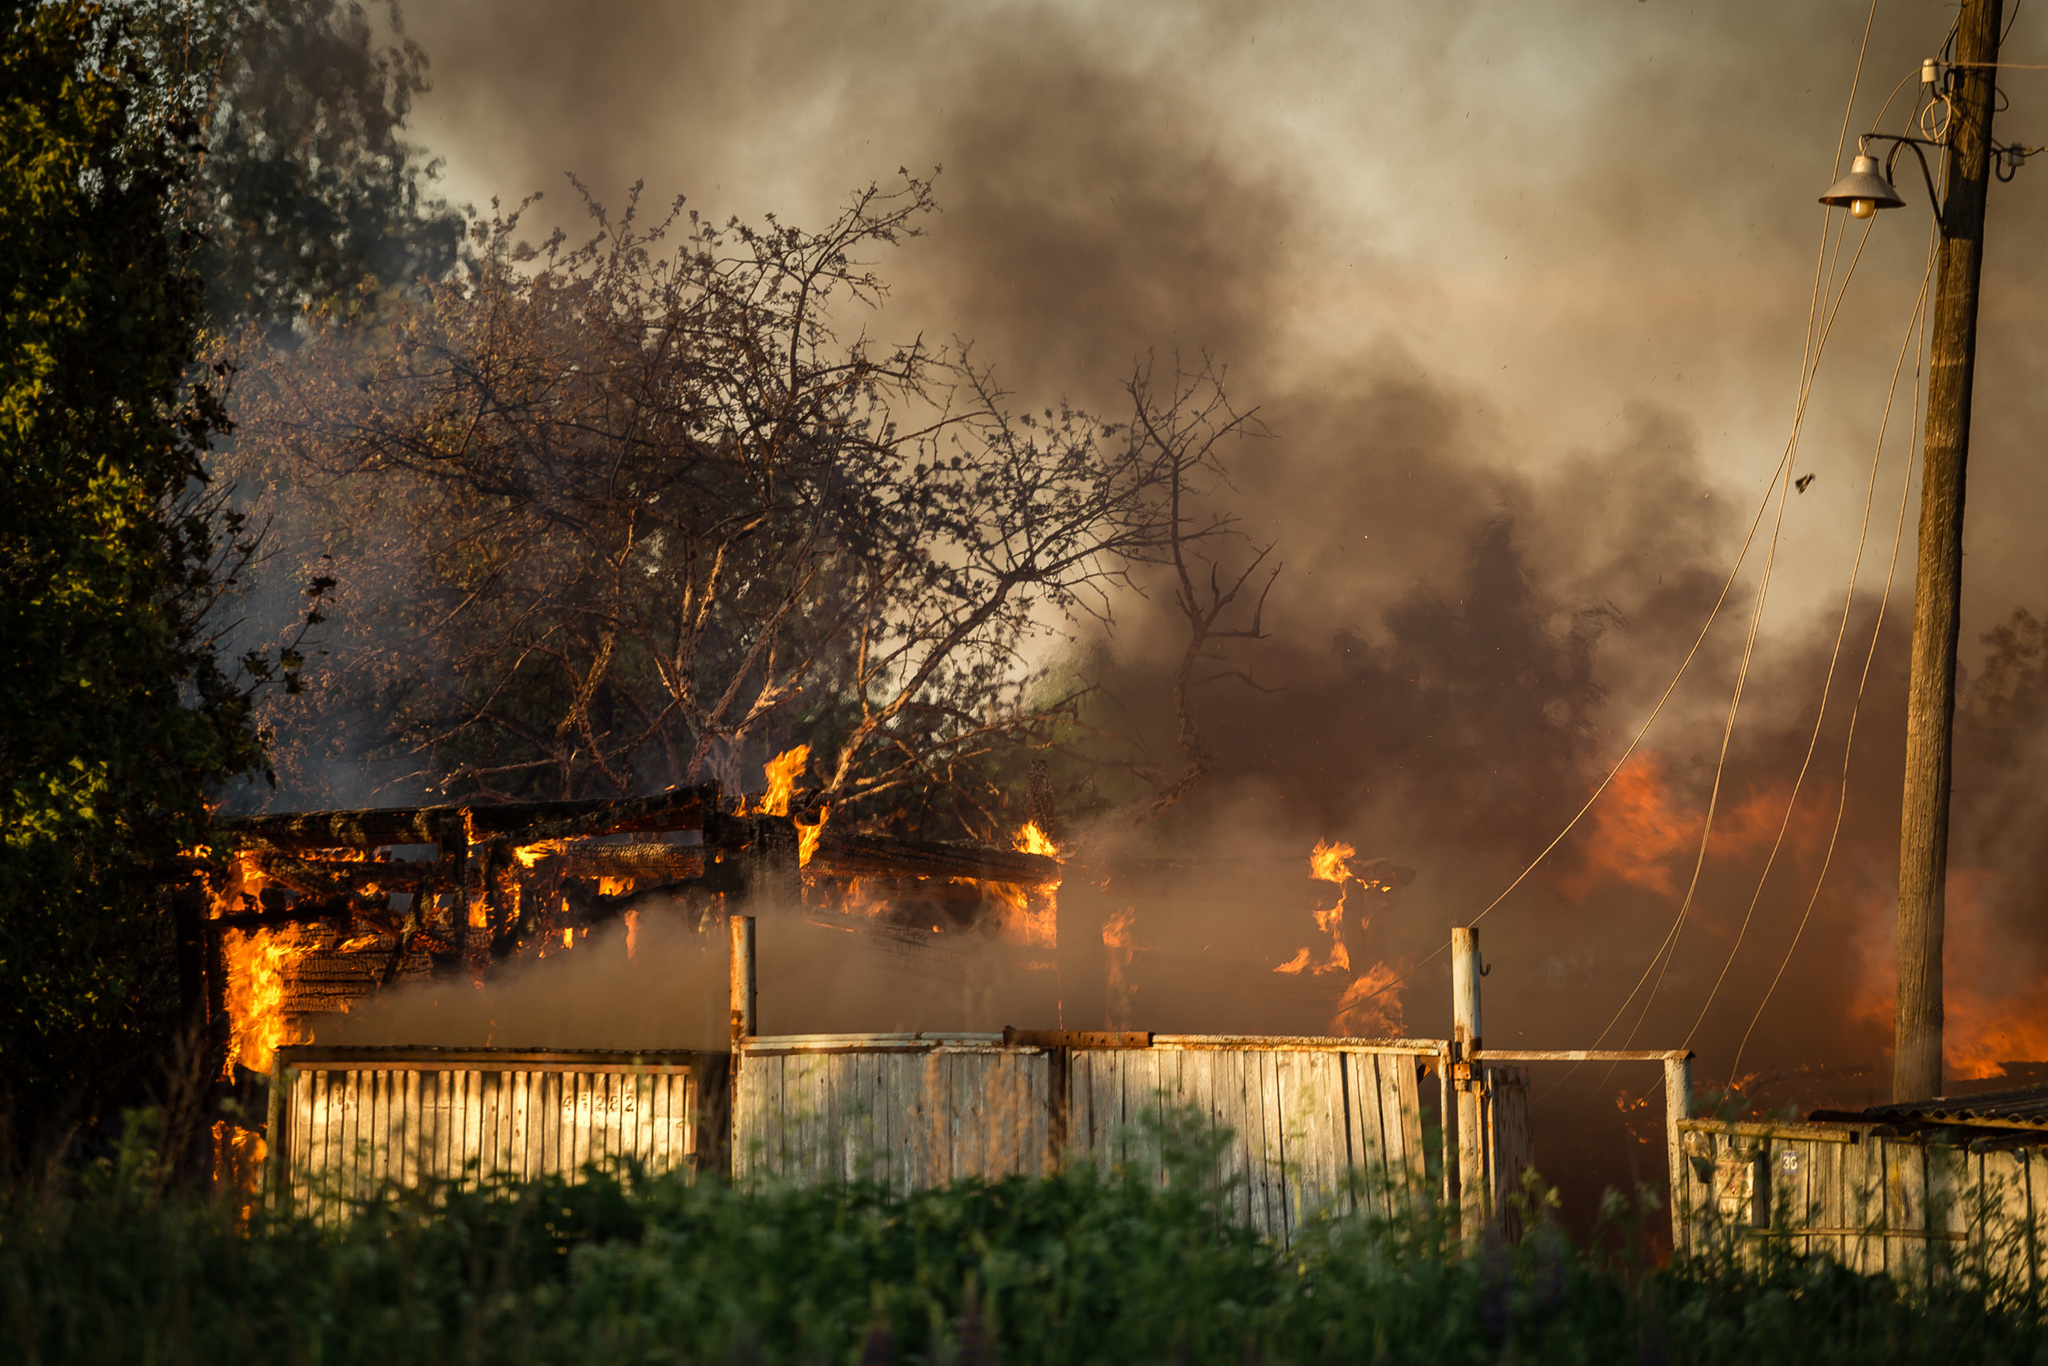 Фото горящего дома в деревне